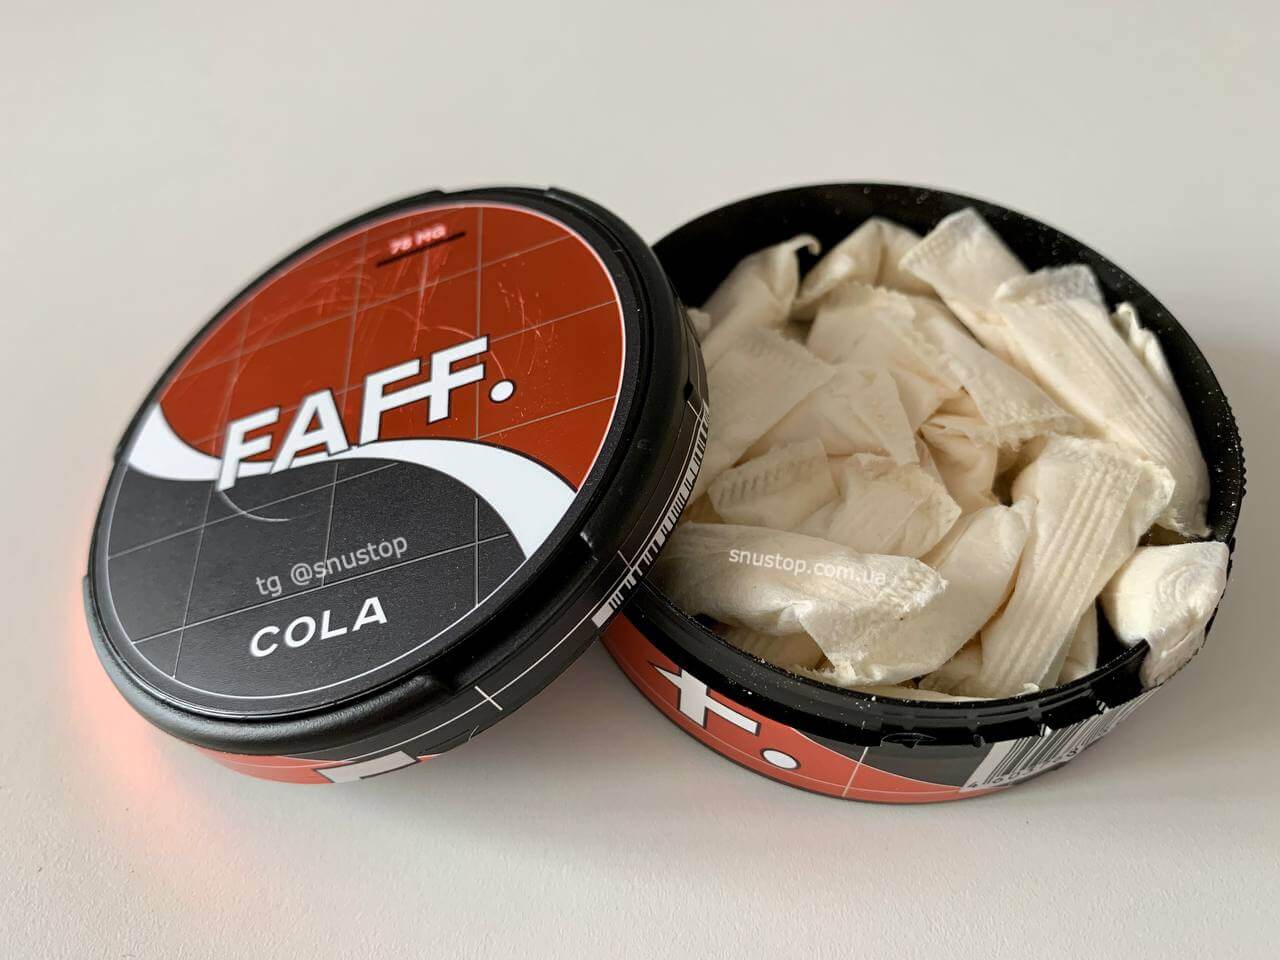 Снюс faff cola 75 mg